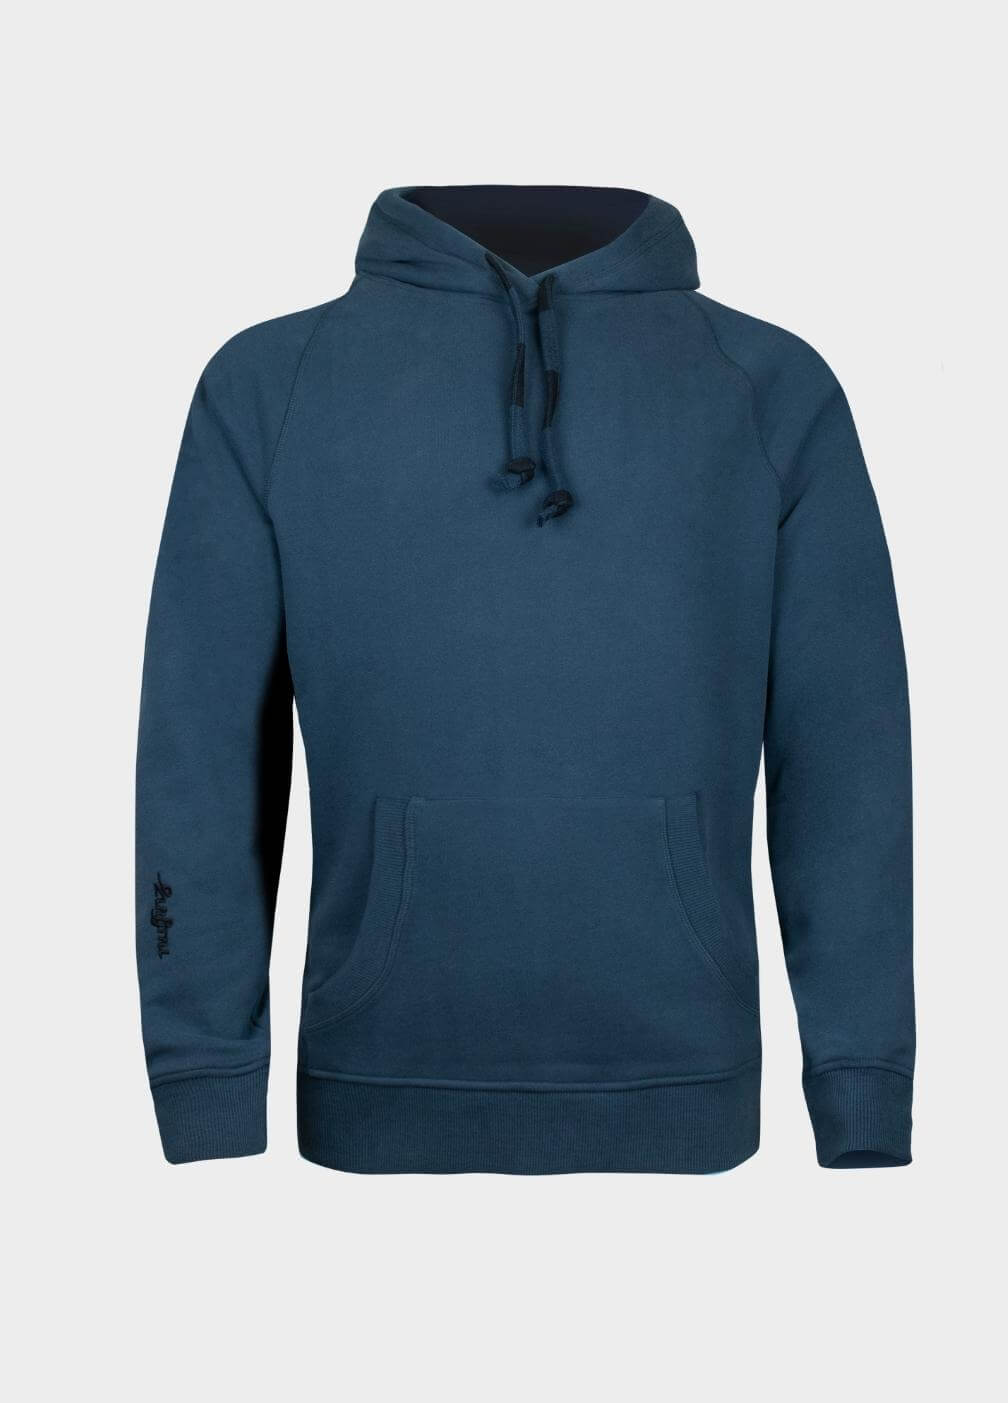 nuffinz menswear- hoodies - sea storm hoodie - 100% organic cotton - carbonized - dark blue